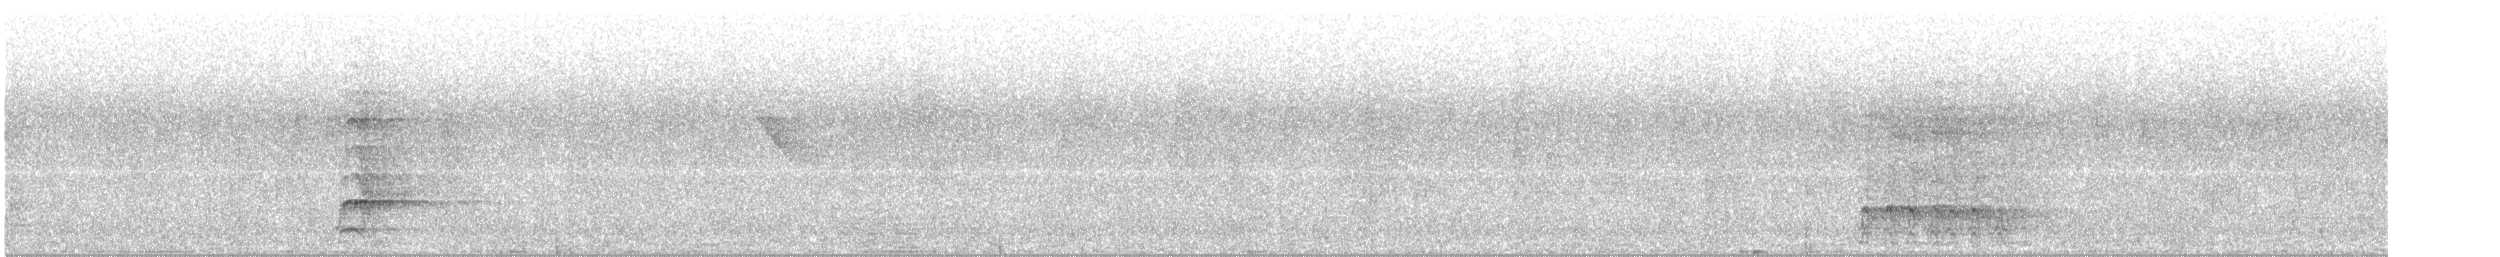 Ak Karınlı Kara Ağaçkakan - ML137955761